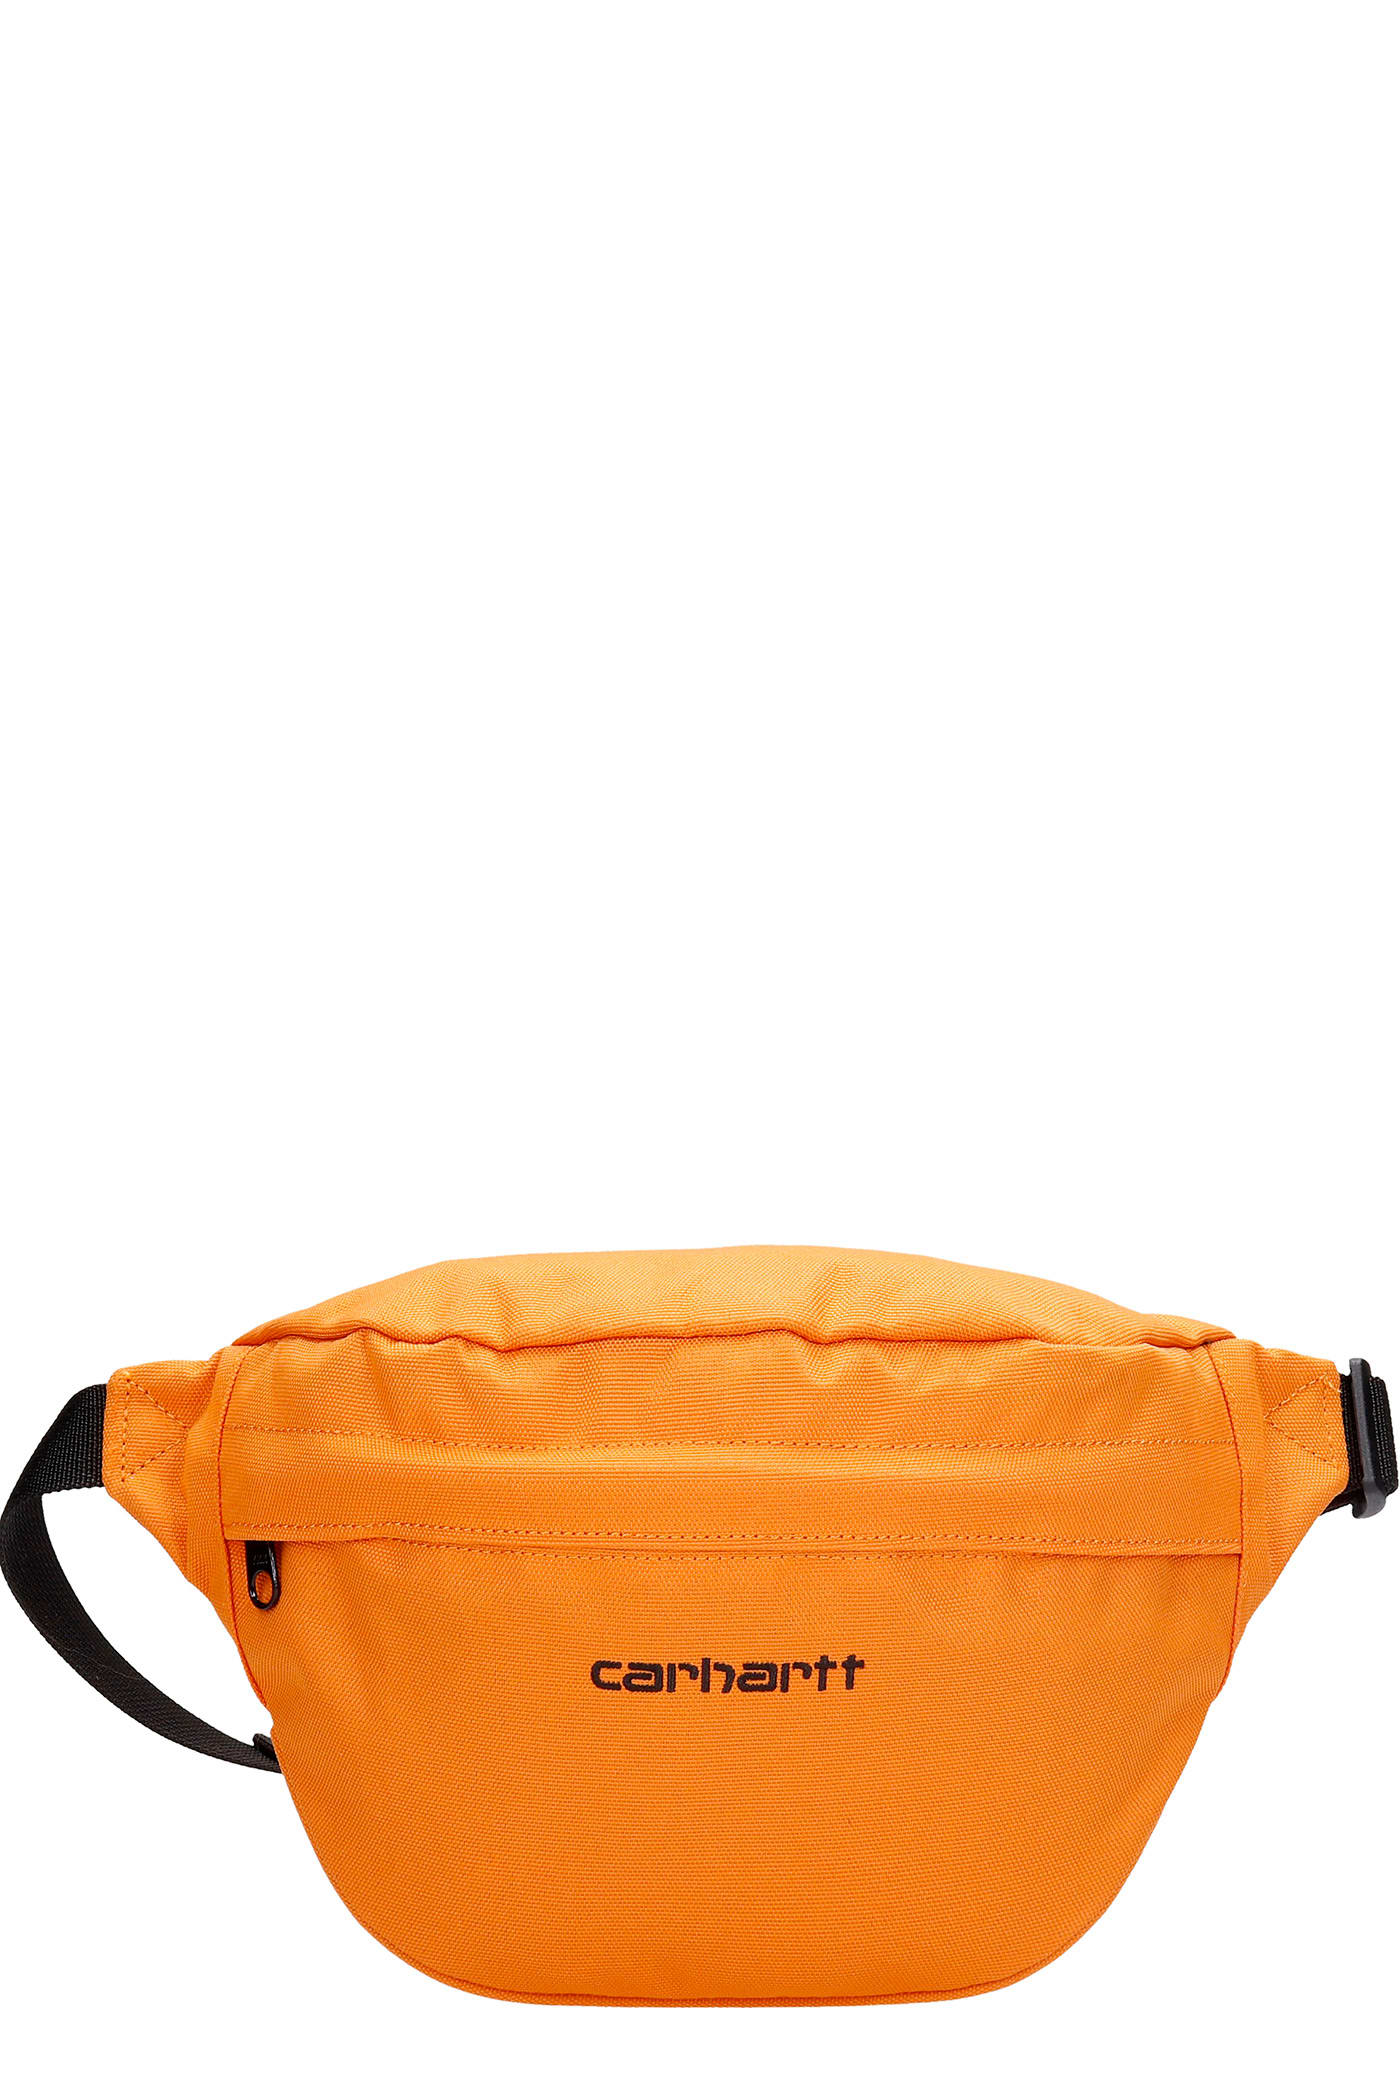 Carhartt Waist Bag In Orange Synthetic Fibers